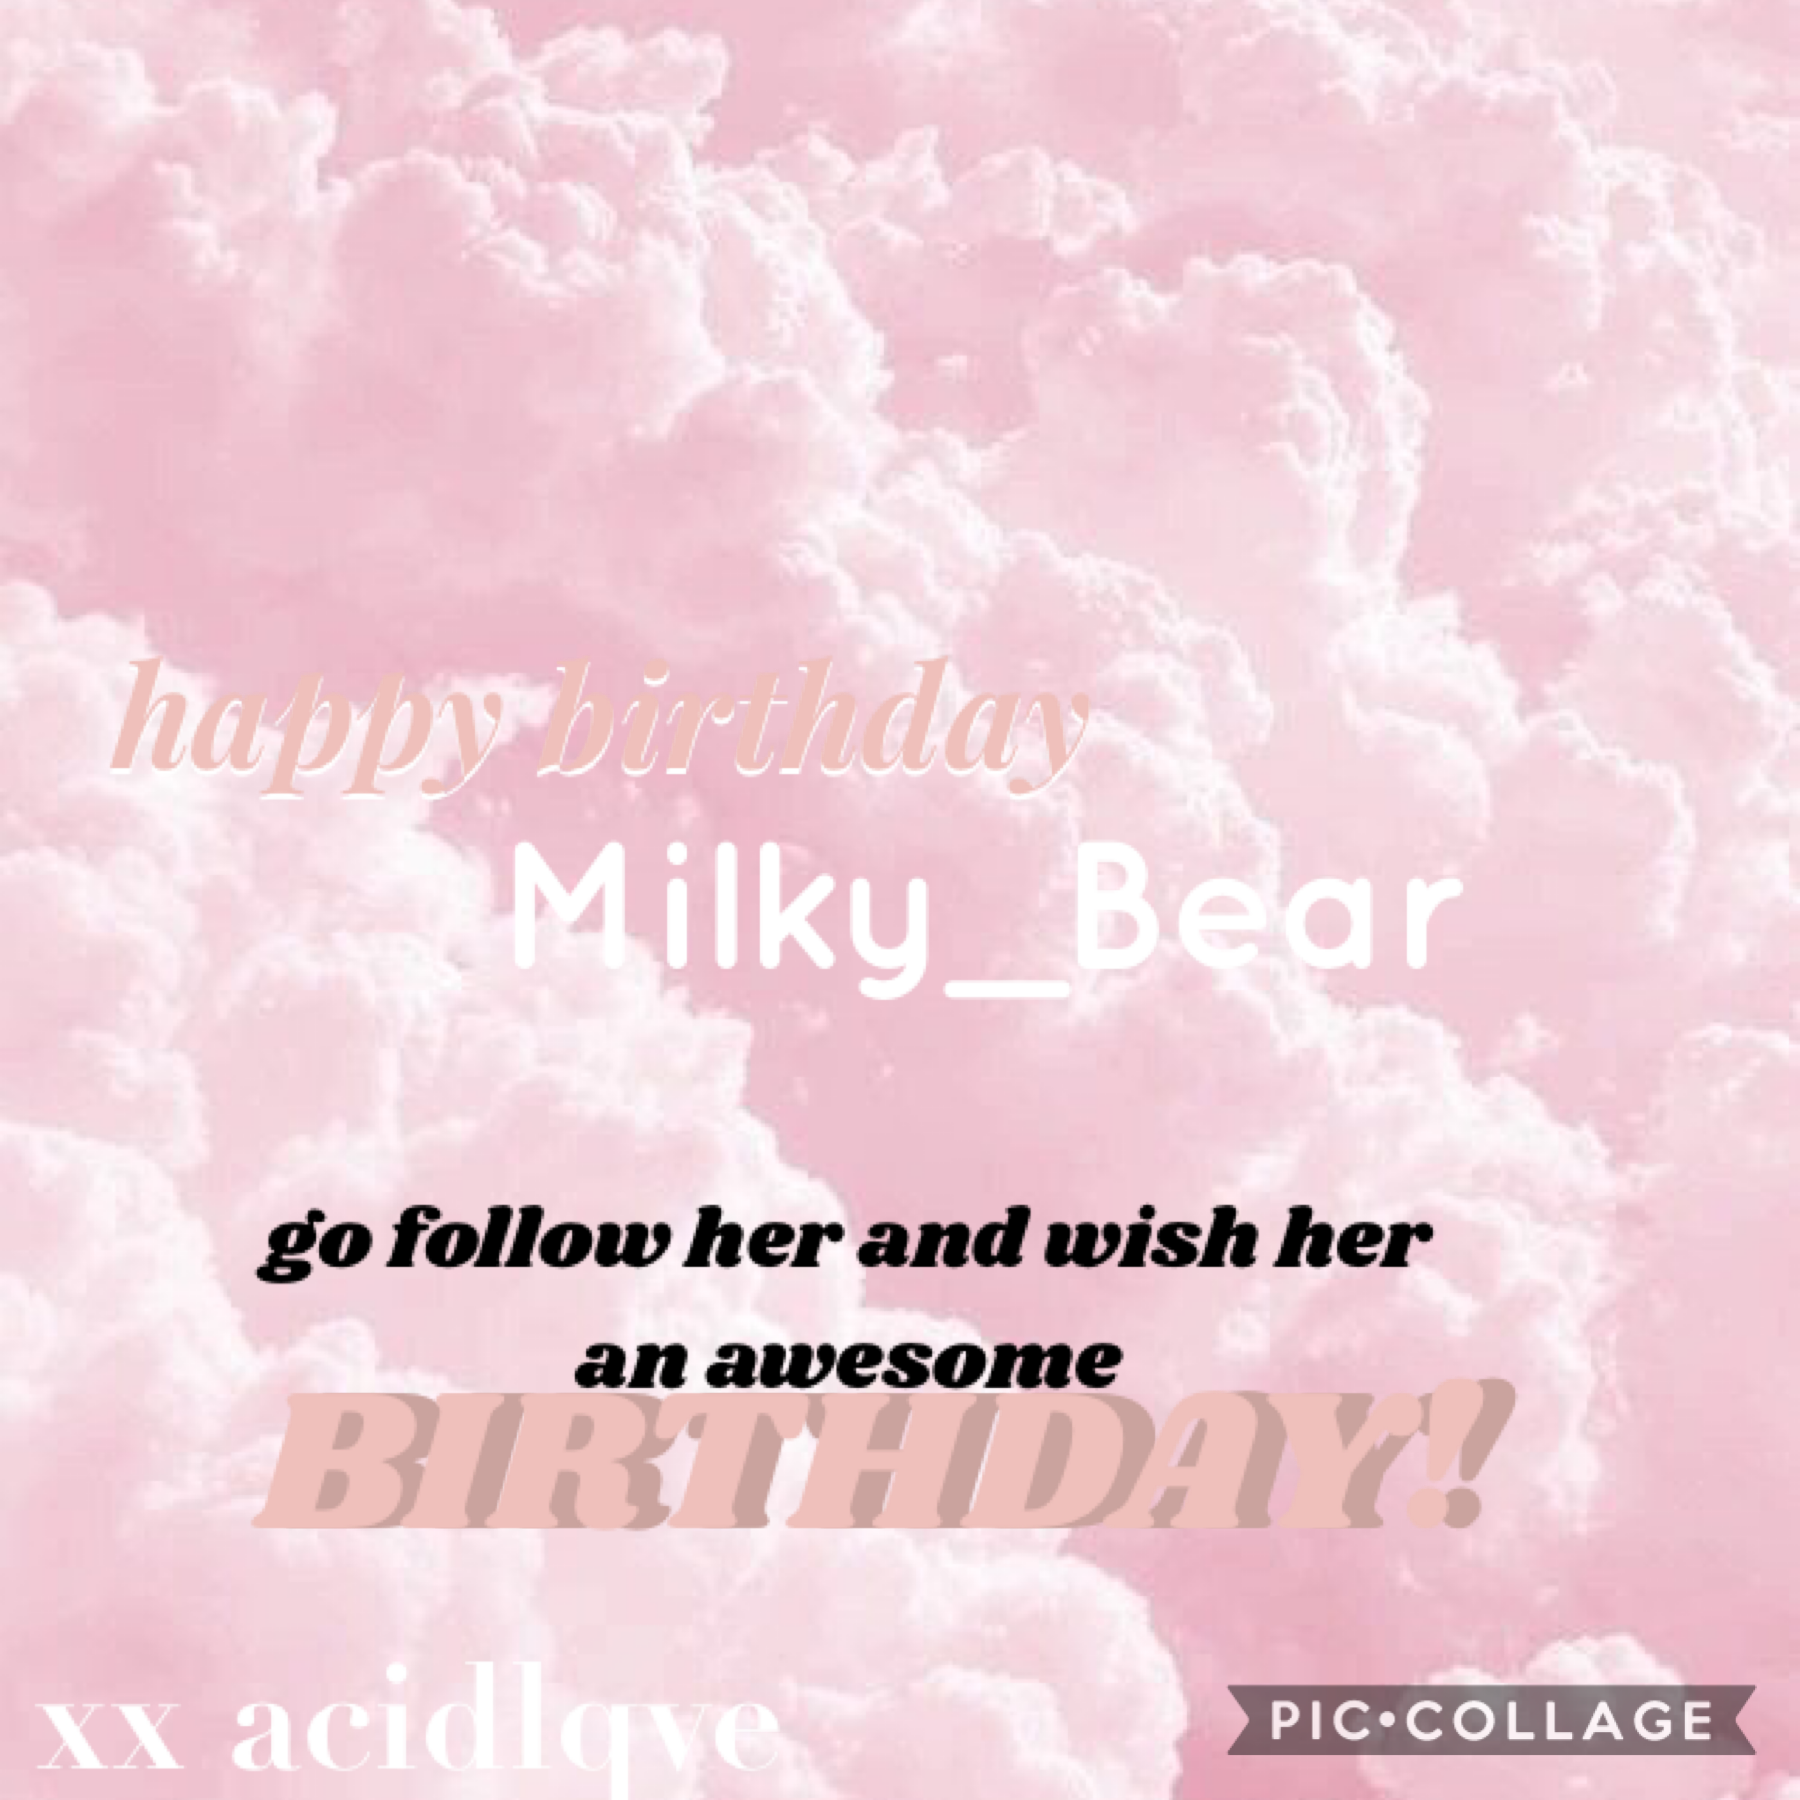 07|10|2020
Happy birthday @Mikly_Bear!
Have an amazing birthday and stay safe! ♥︎
xx -acidlqve